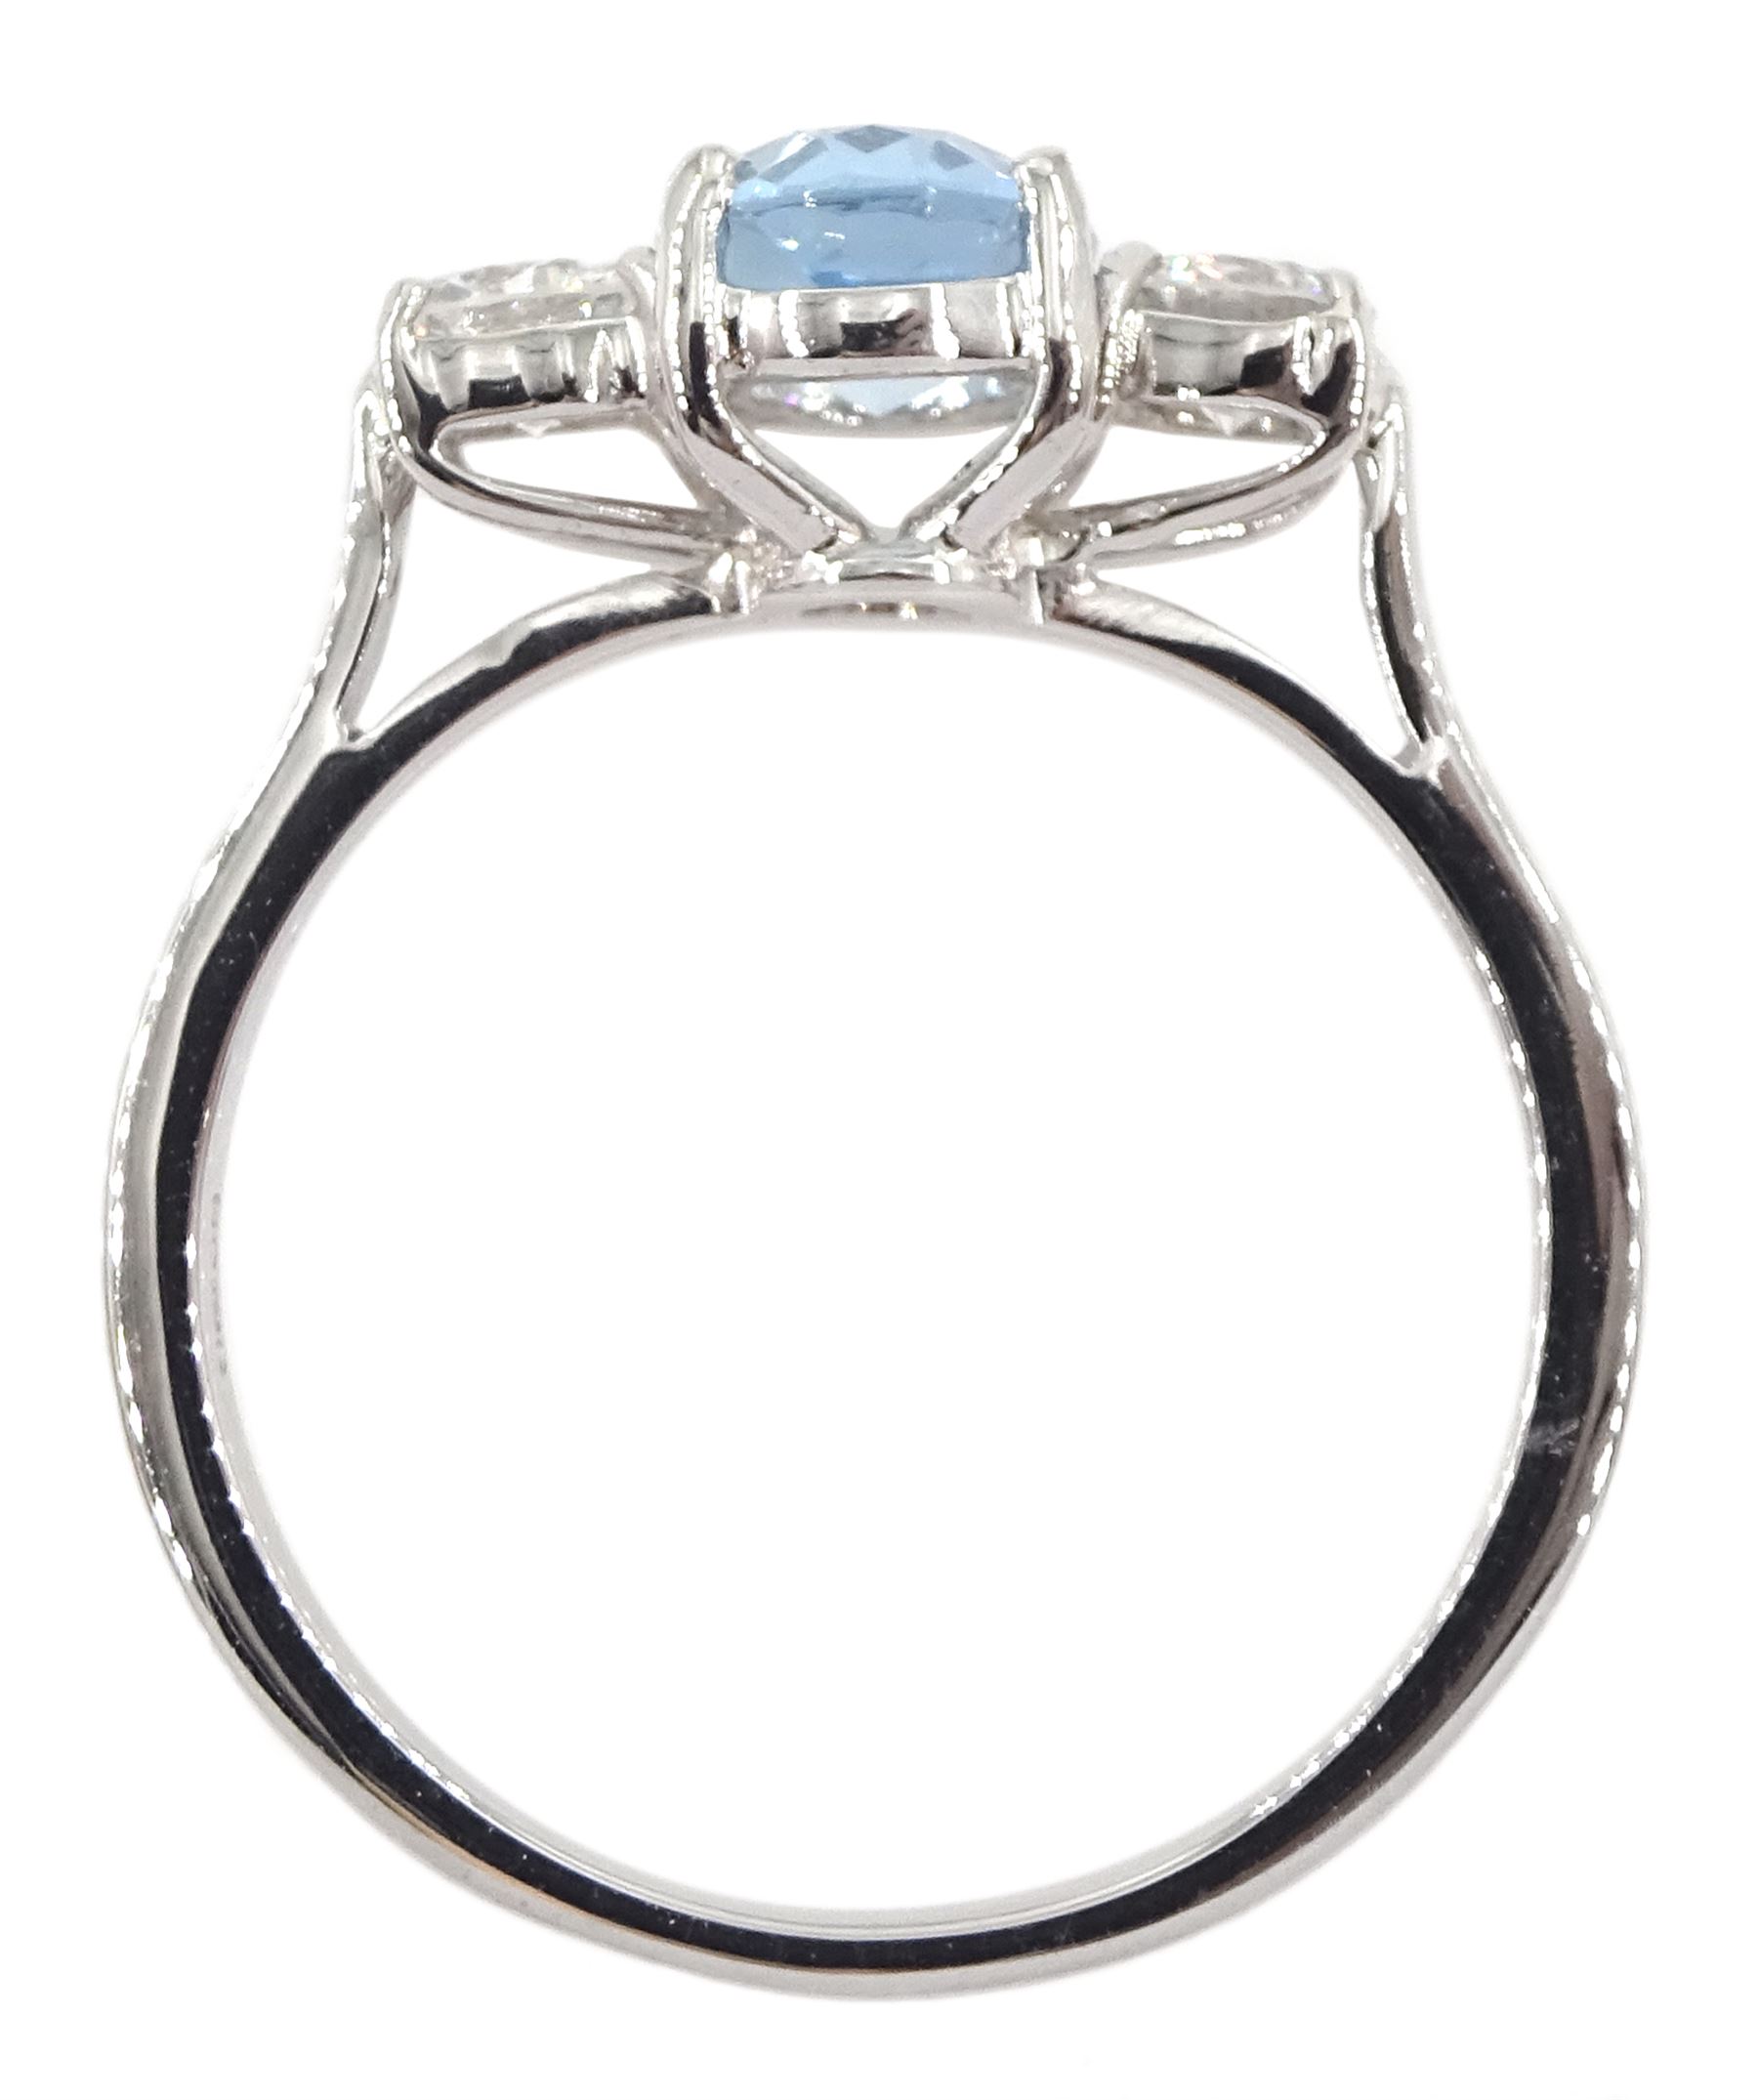 18ct white gold three stone oval aquamarine and round brilliant cut diamond ring - Image 4 of 4